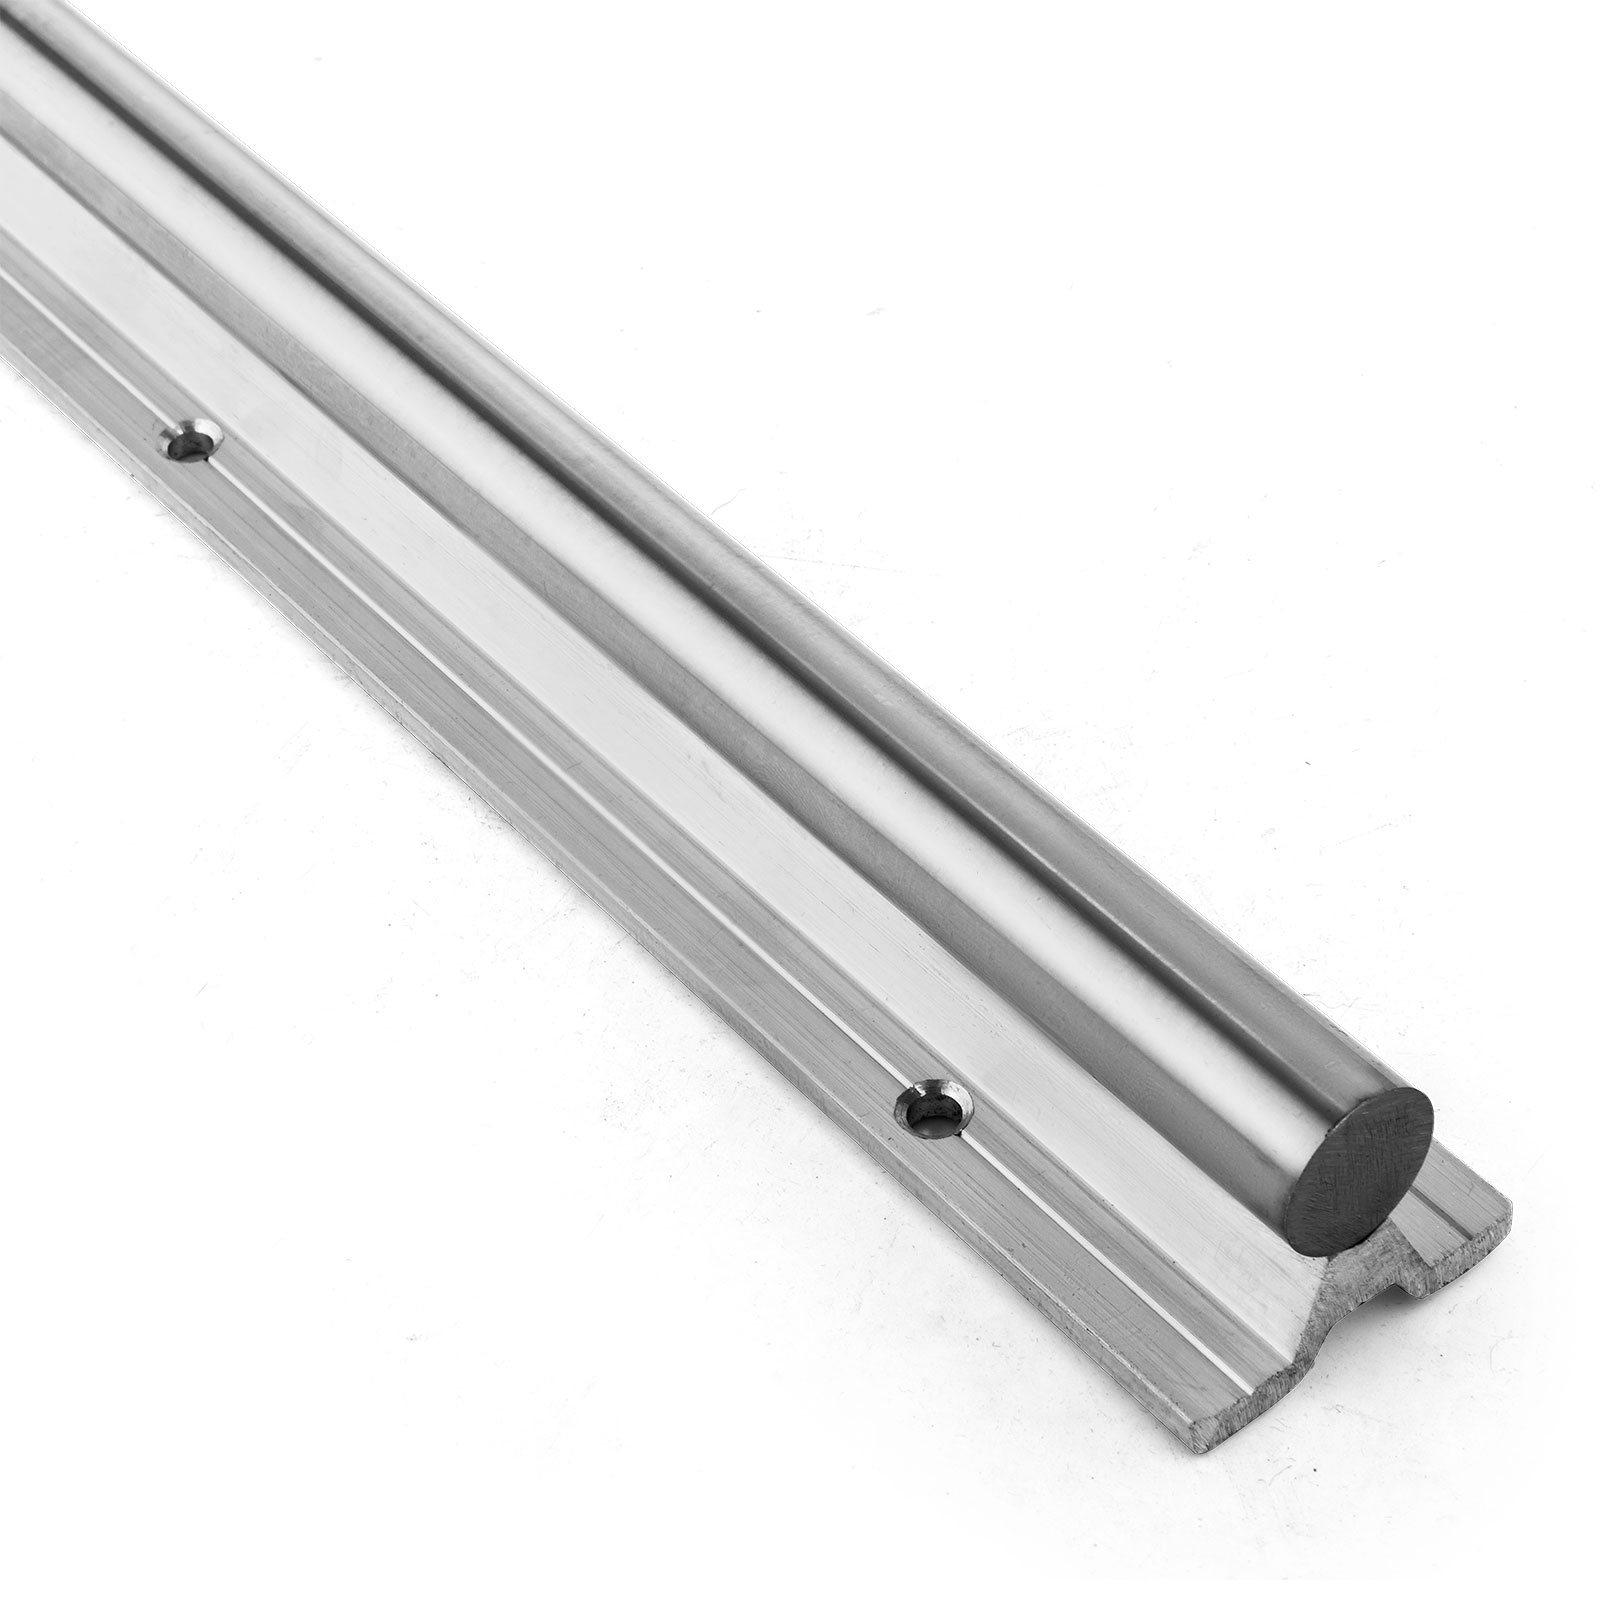 SBR20 650mm-2200mm CNC Linear Rail Shaft Slide Rod + 4 SBR20UU Bearing